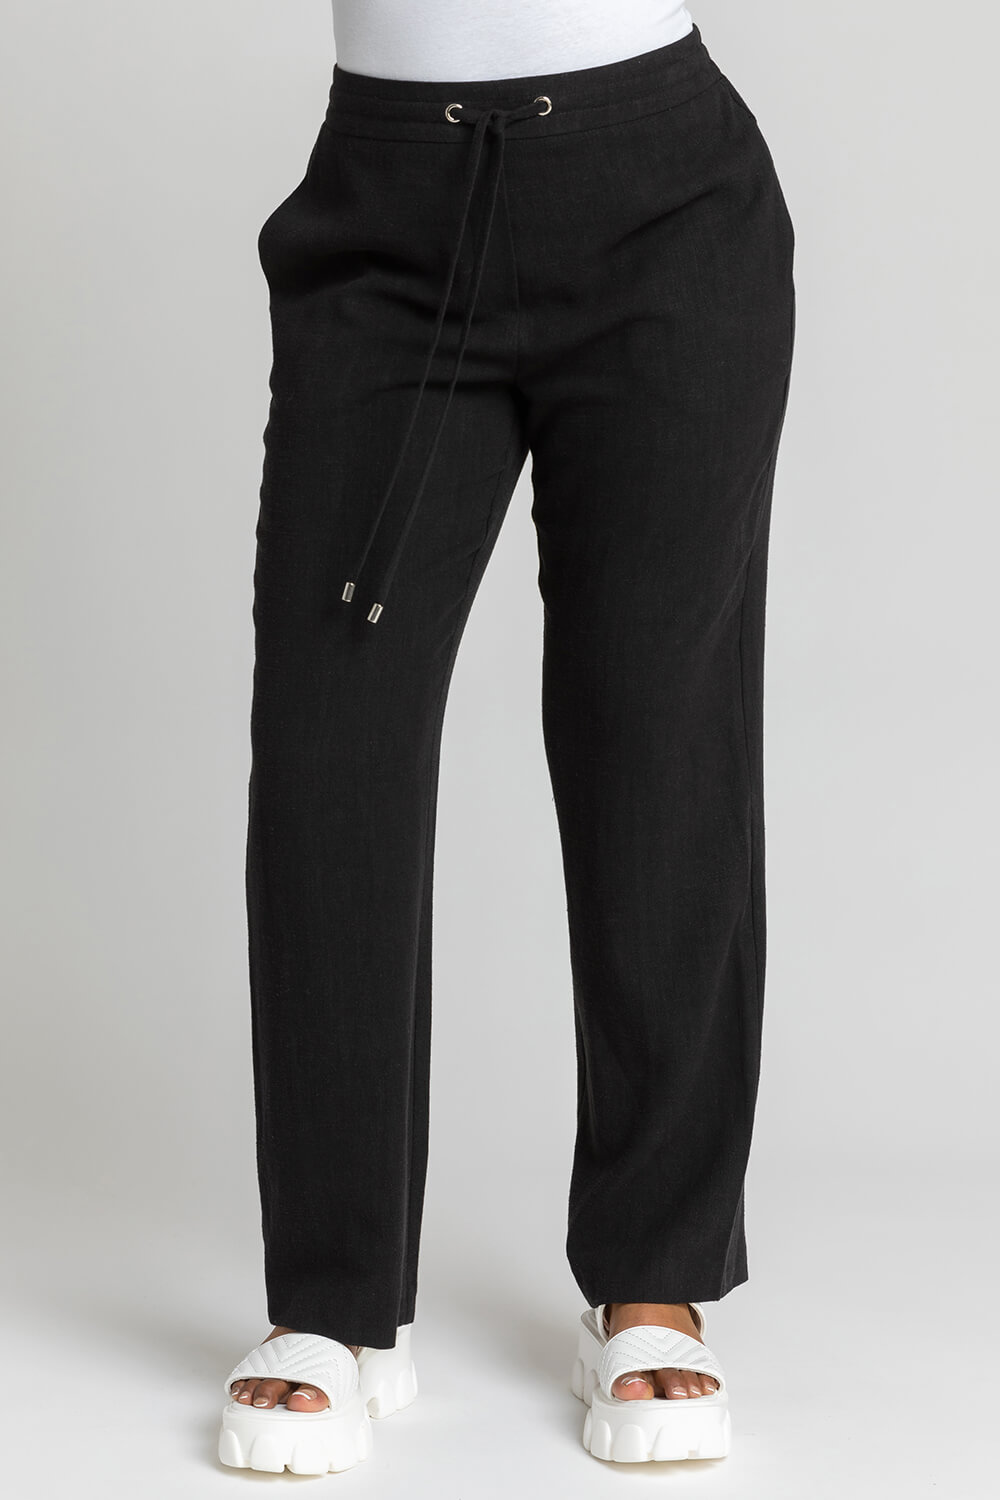 Black Petite Linen Tie Front Trousers, Image 2 of 4